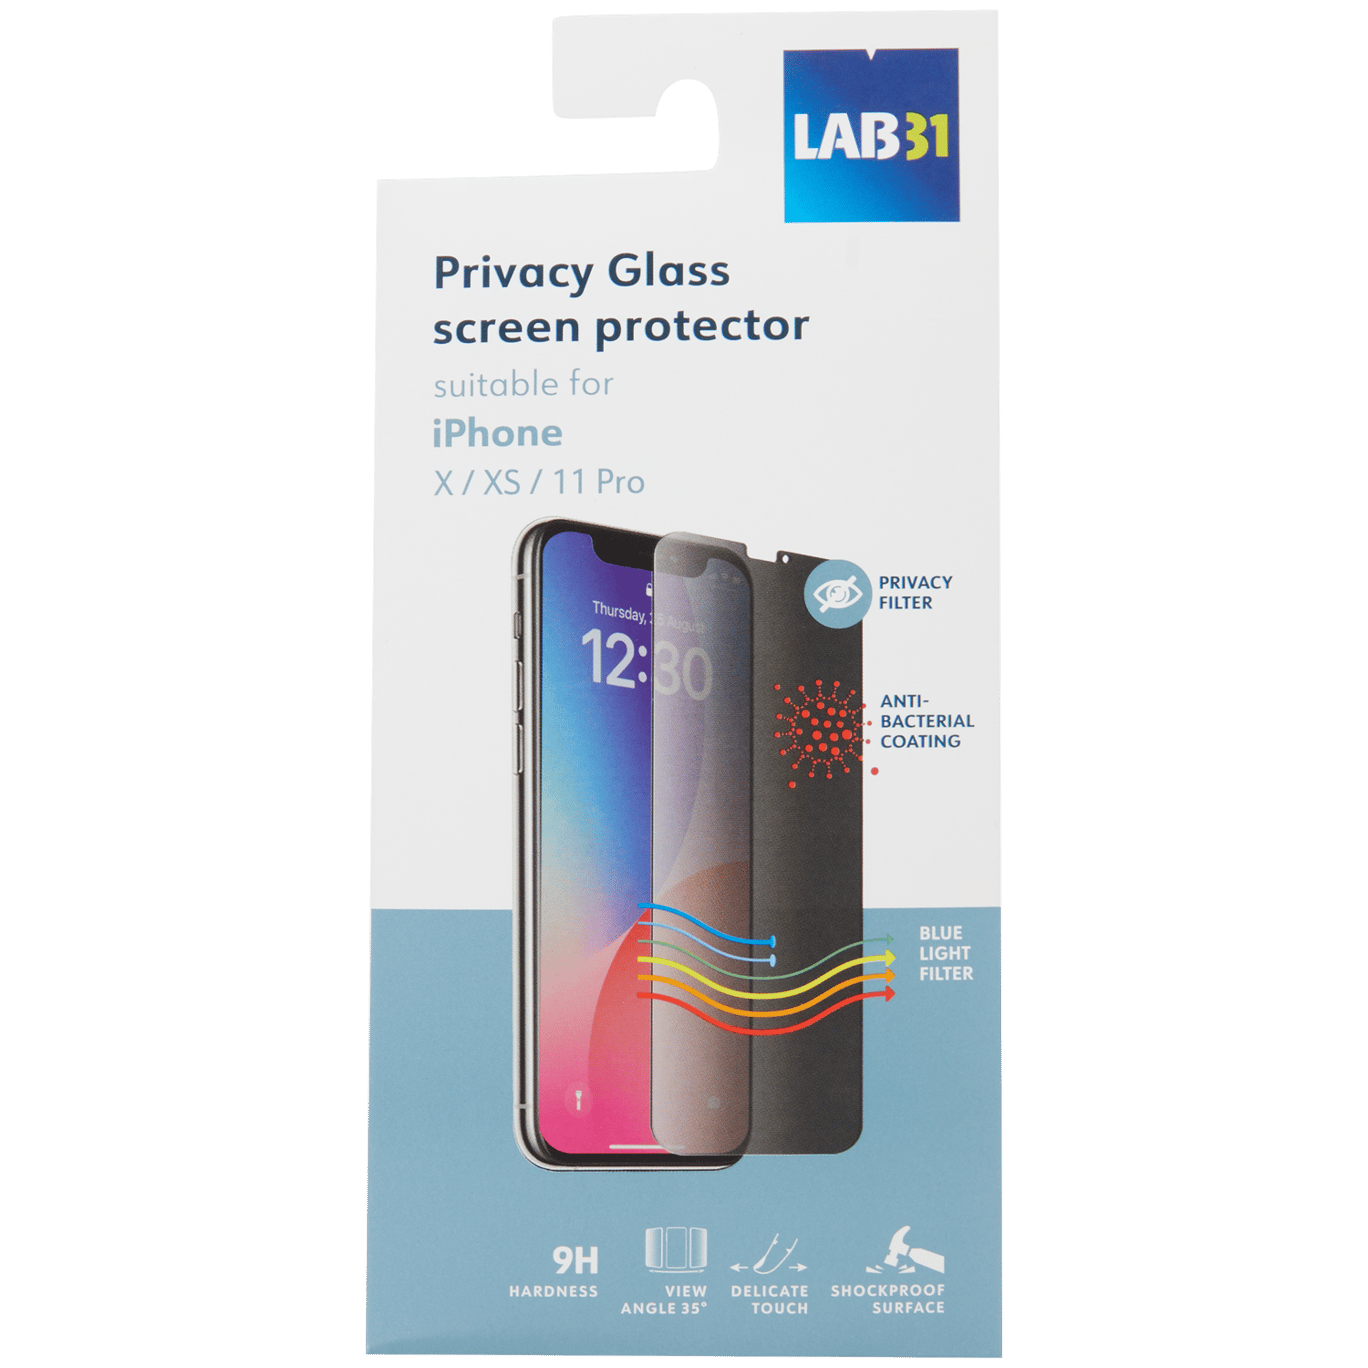 Lab31 privacy screenprotector